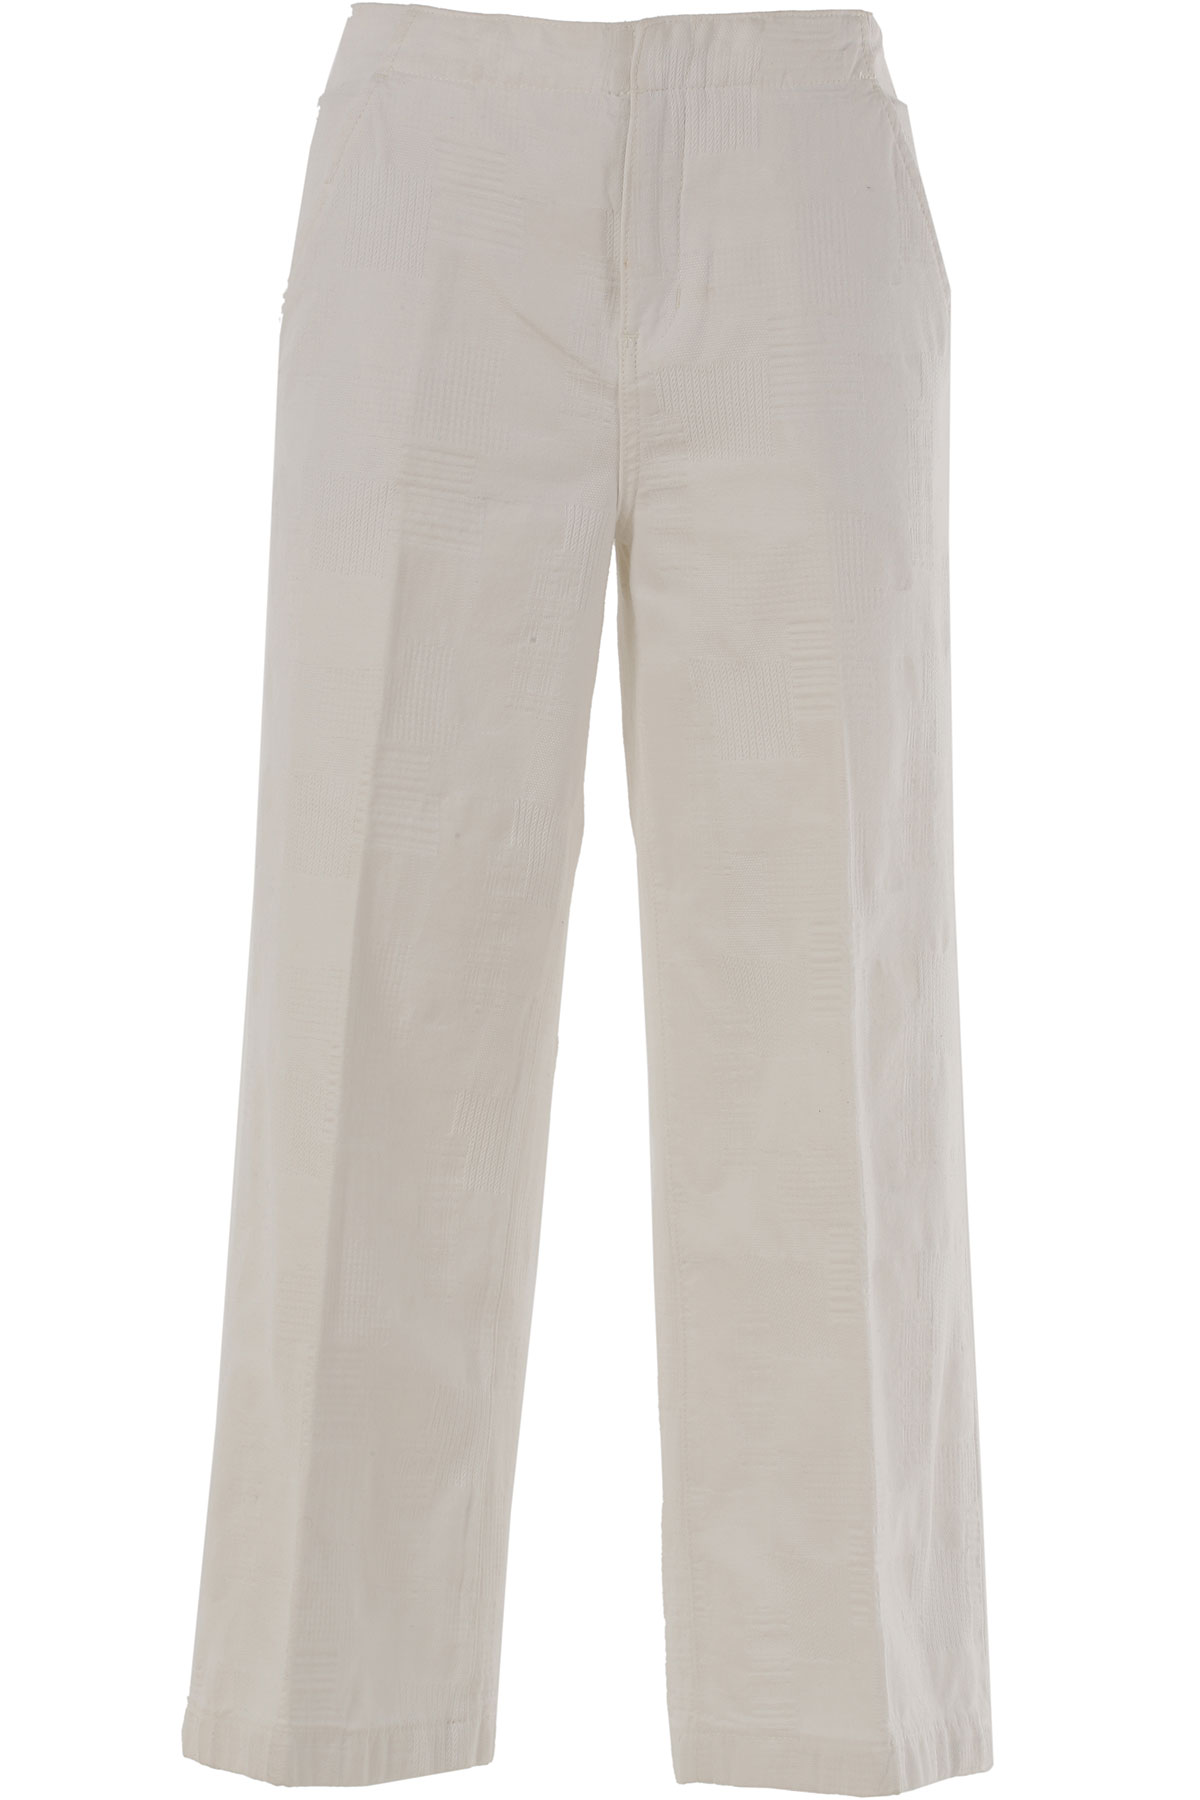 Tory Burch Pantalon Femme Outlet, Blanc, Coton, 2017, 40 41